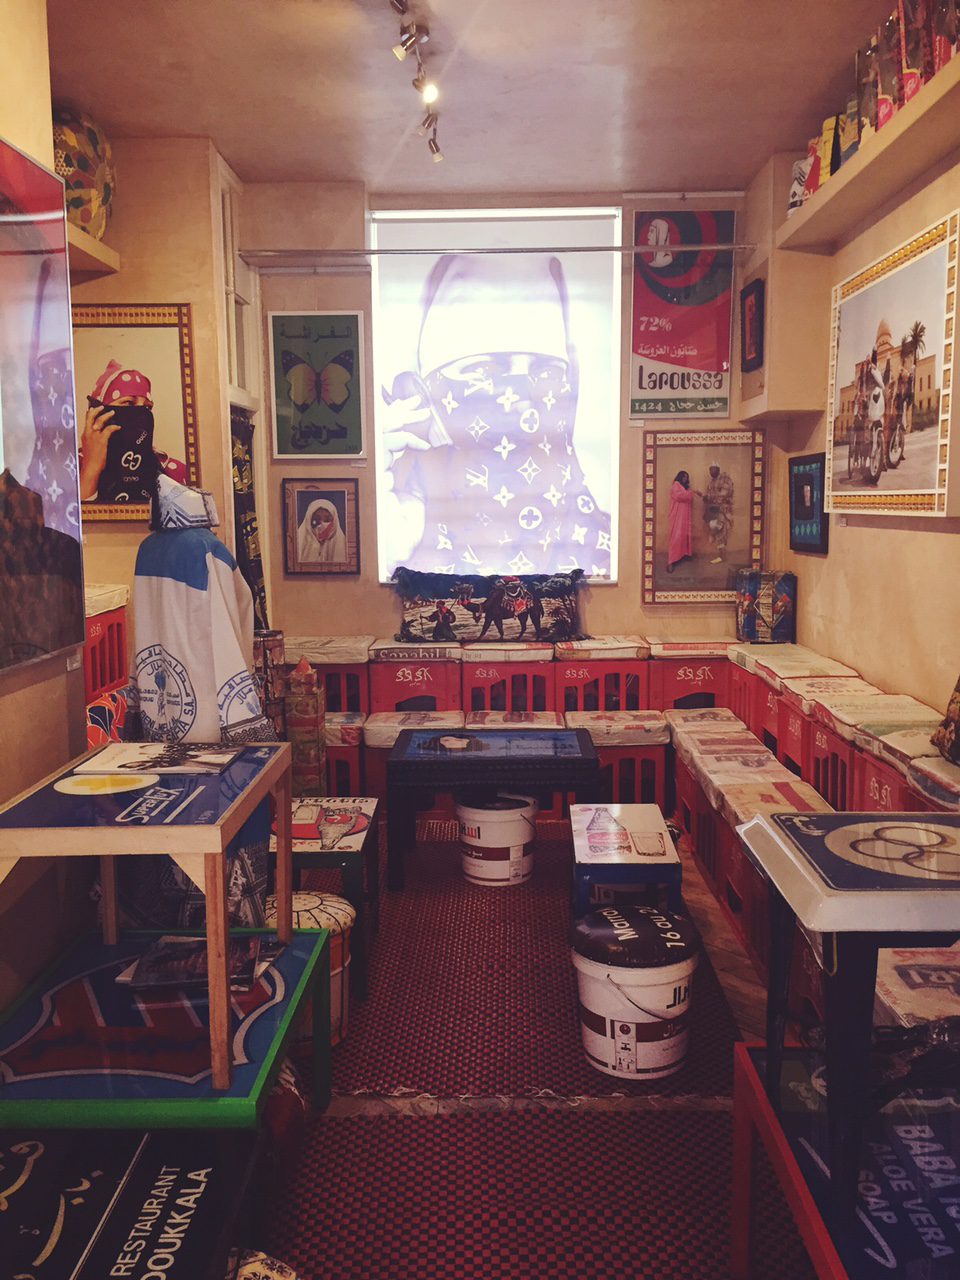 Hassan Hajjaj - Larache Studio, 'Le salon', 2015, Mixed media installation, Courtesy of Larache Studio